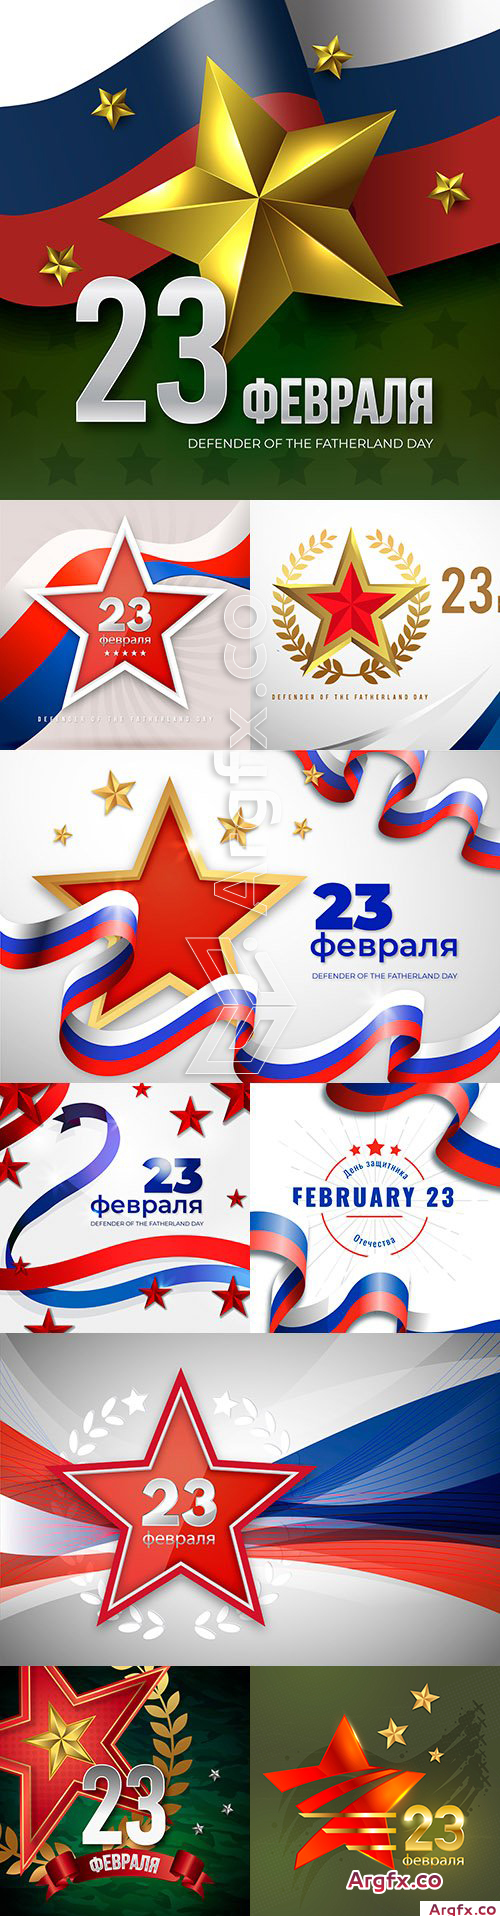 February 23 Defender Fatherland Day illustration